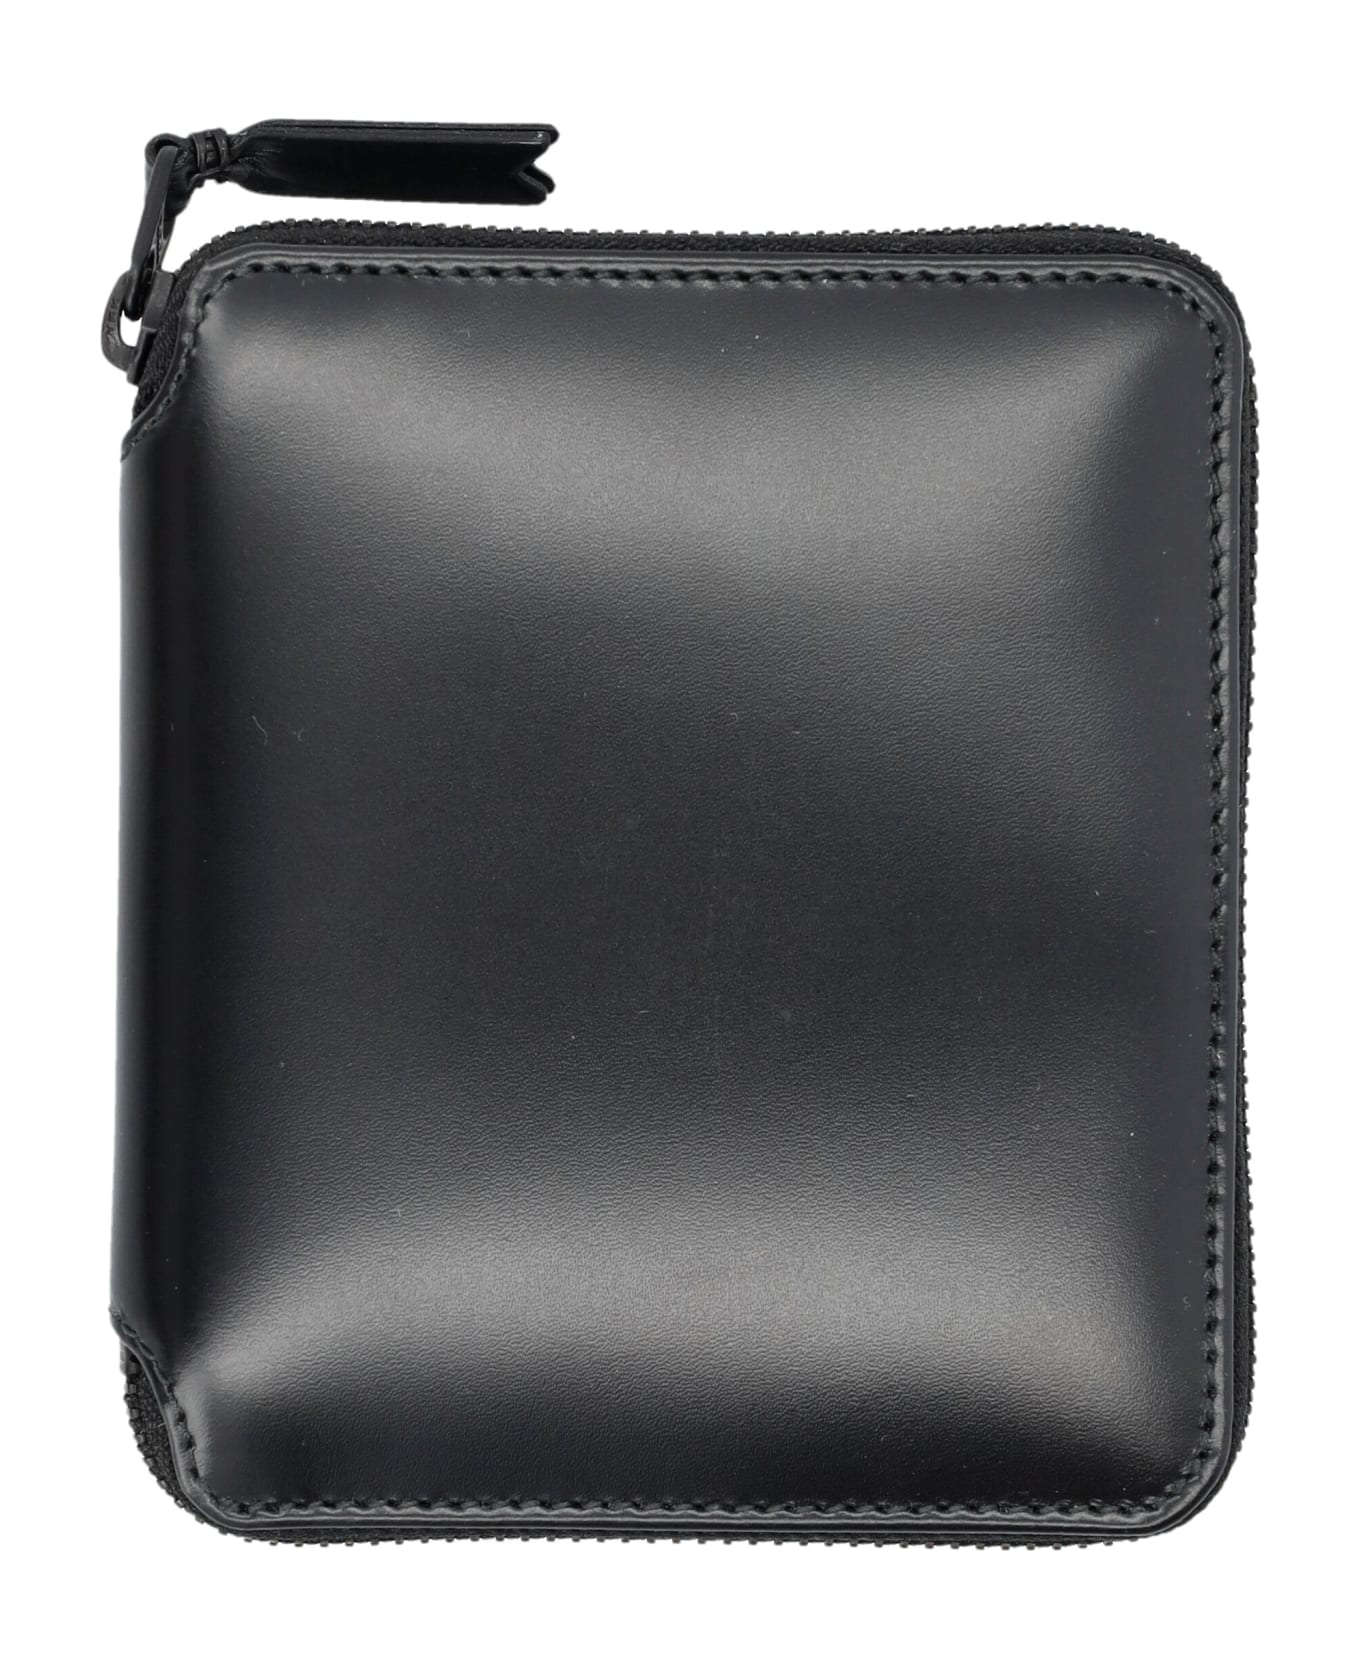 Comme des Garçons Wallet Very Black Vertical Zip Around Wallet - BLACK